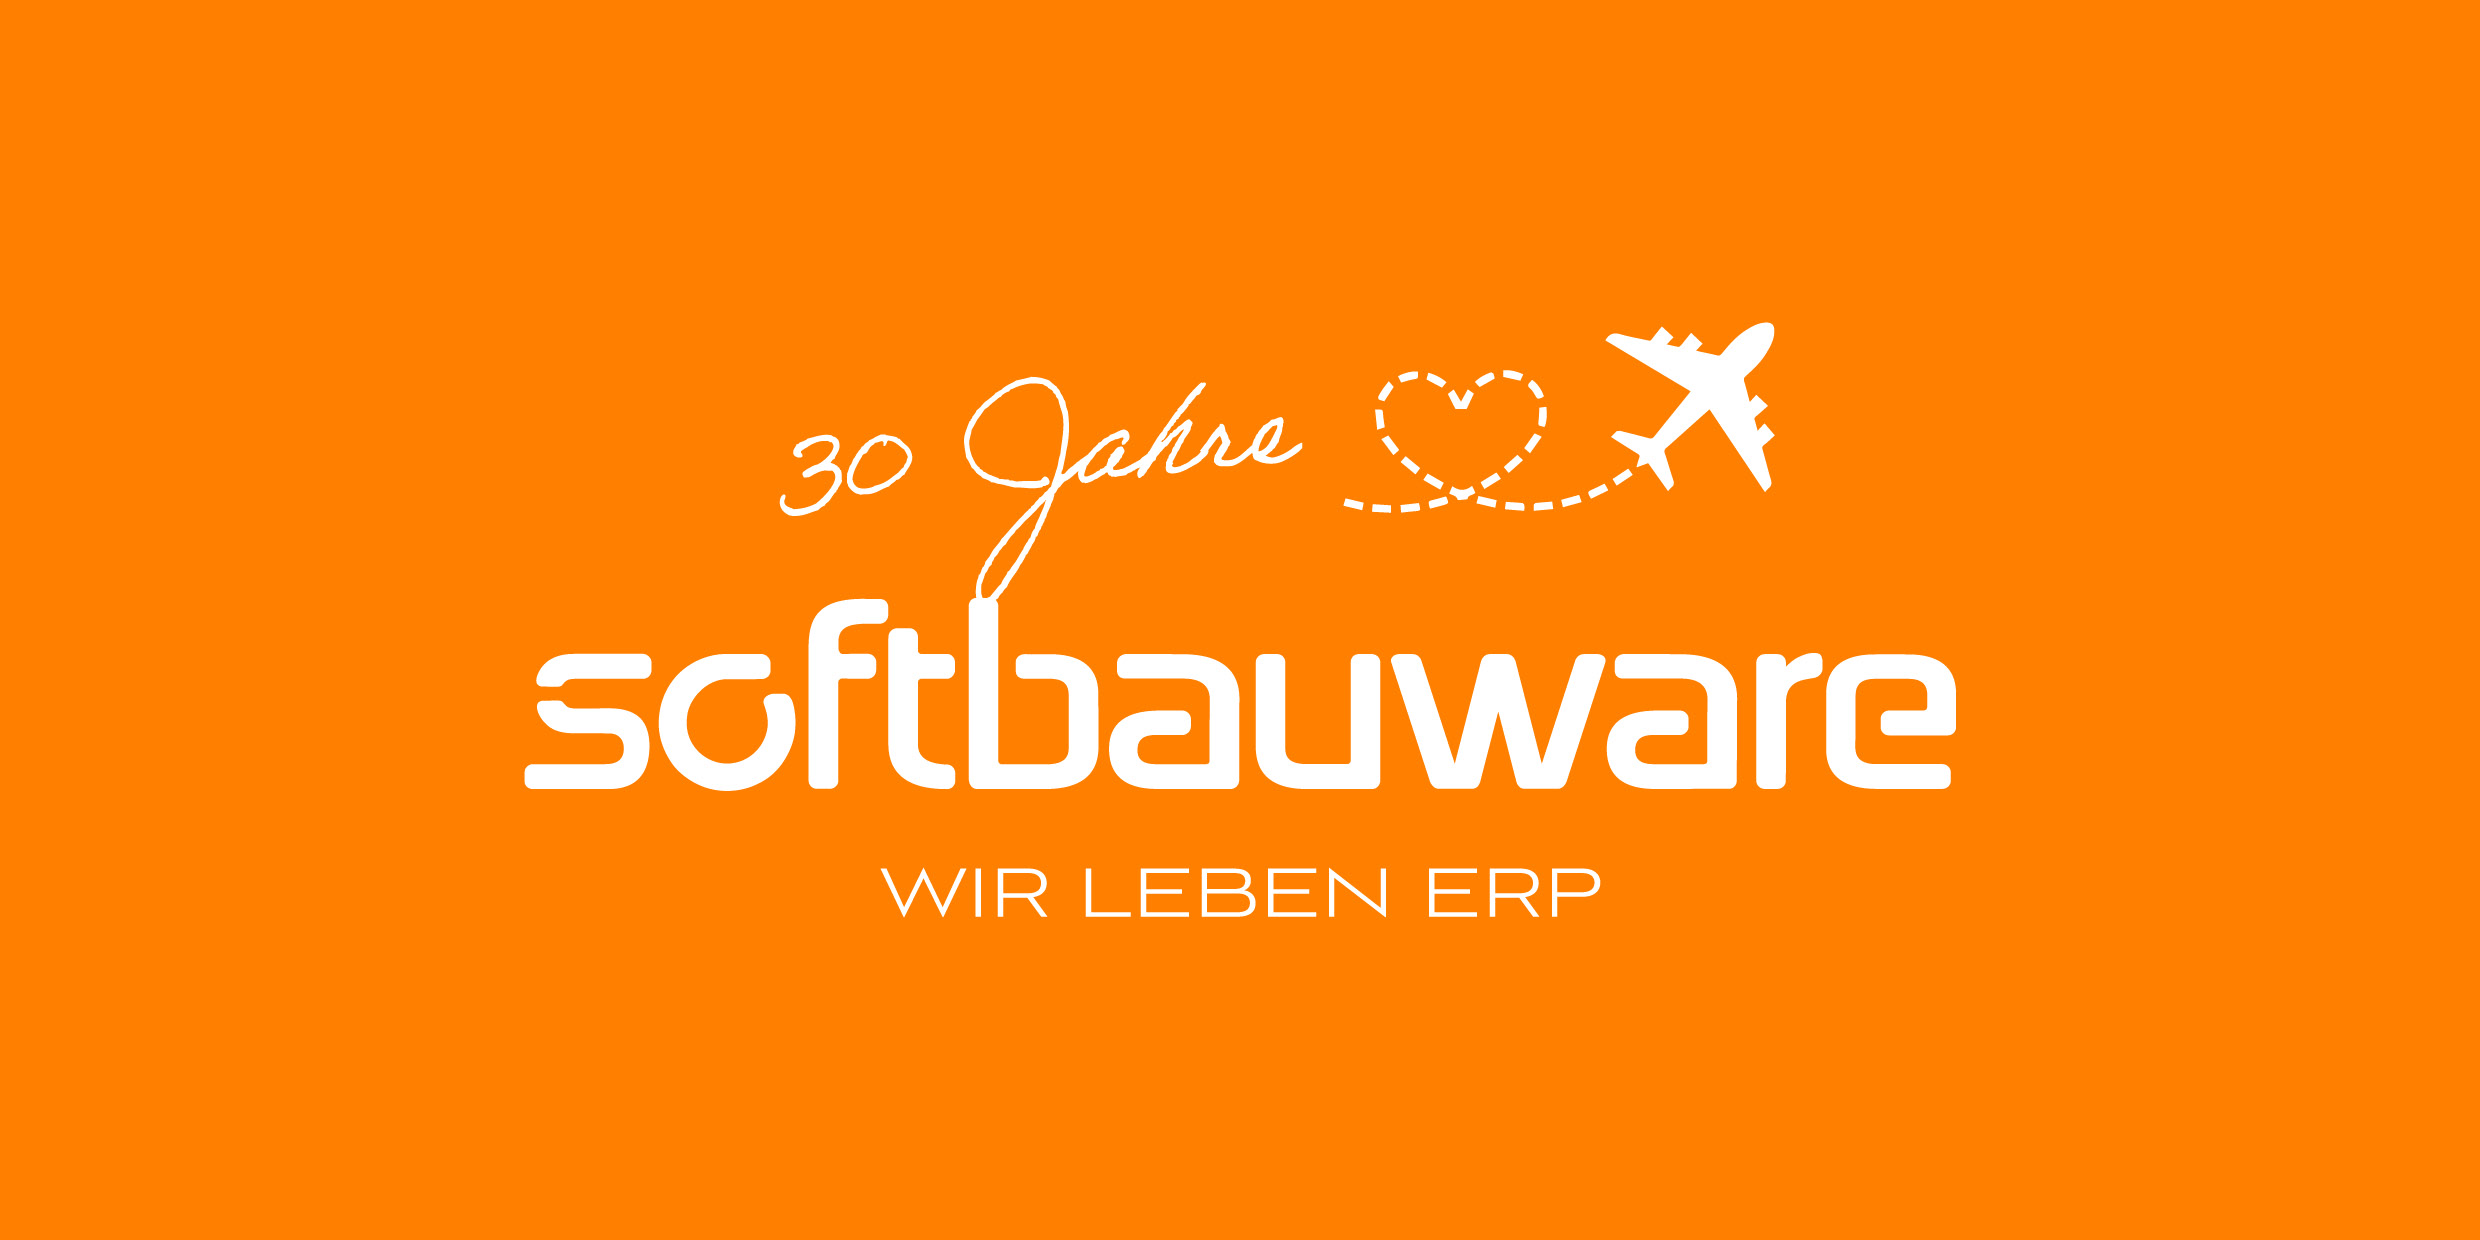 (c) Softbauware.de